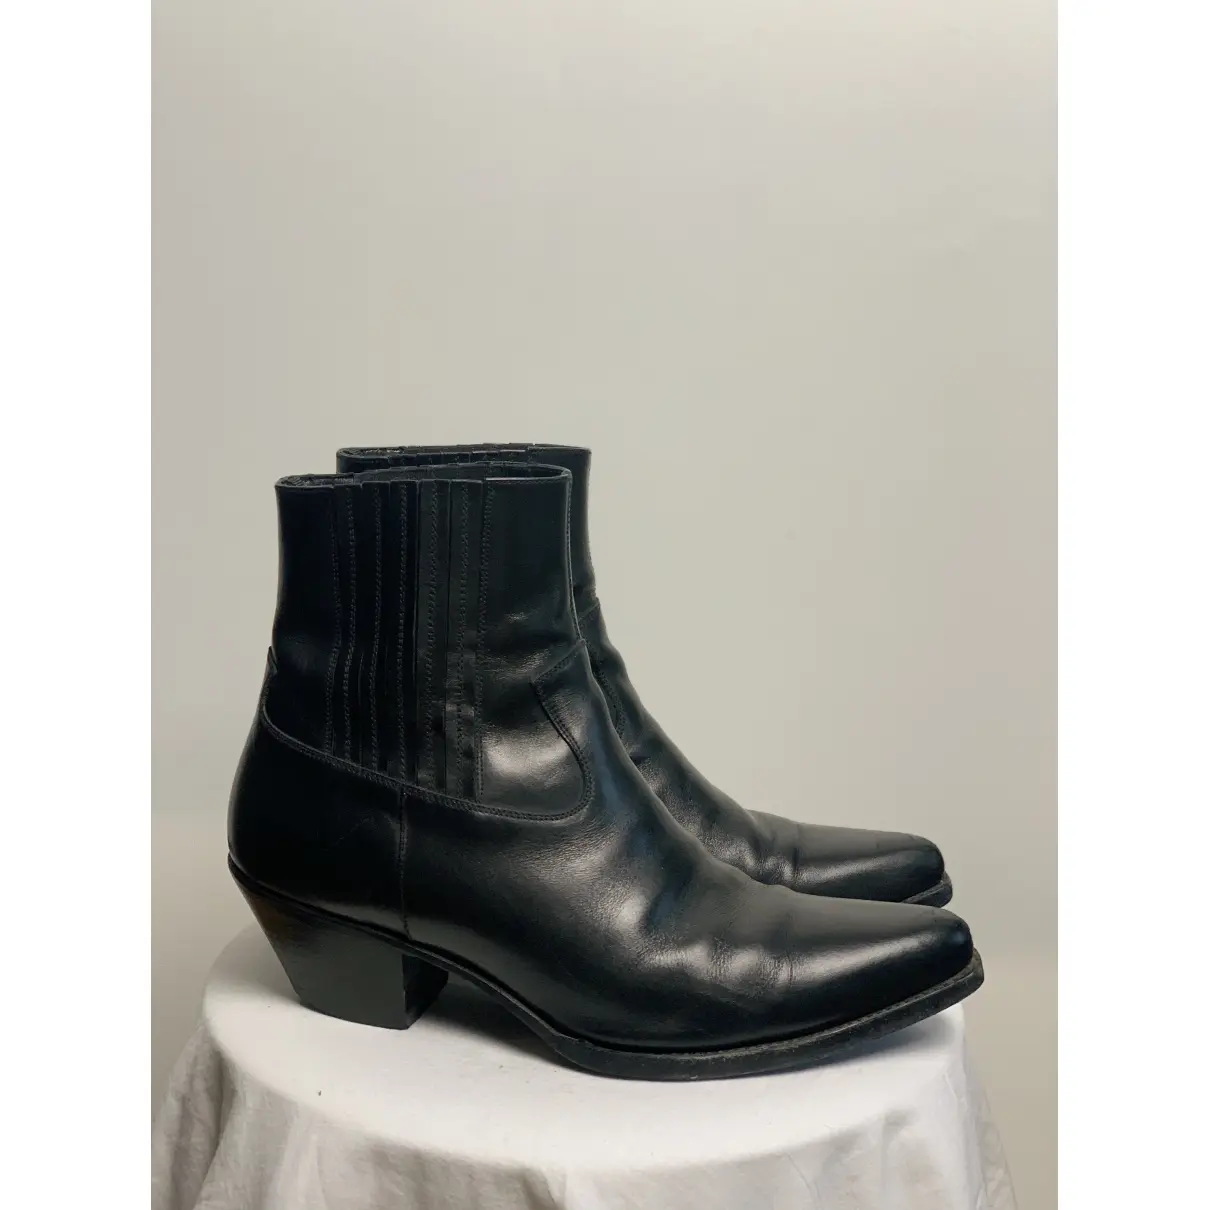 Buy Celine Berlin leather boots online